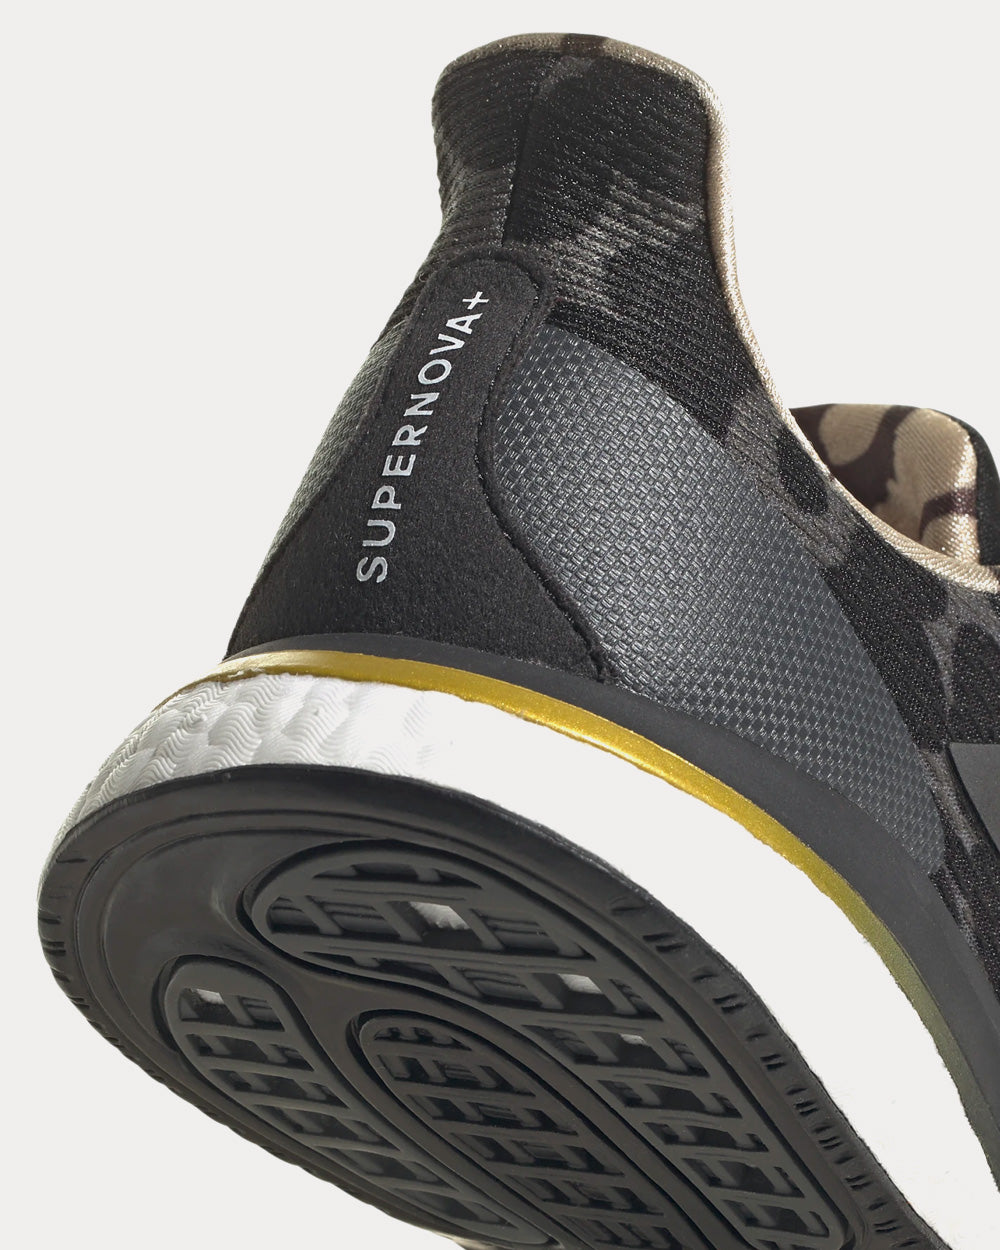 Adidas x Marimekko - Supernova Grey Six / Core Black / Gold Metallic Running Shoes